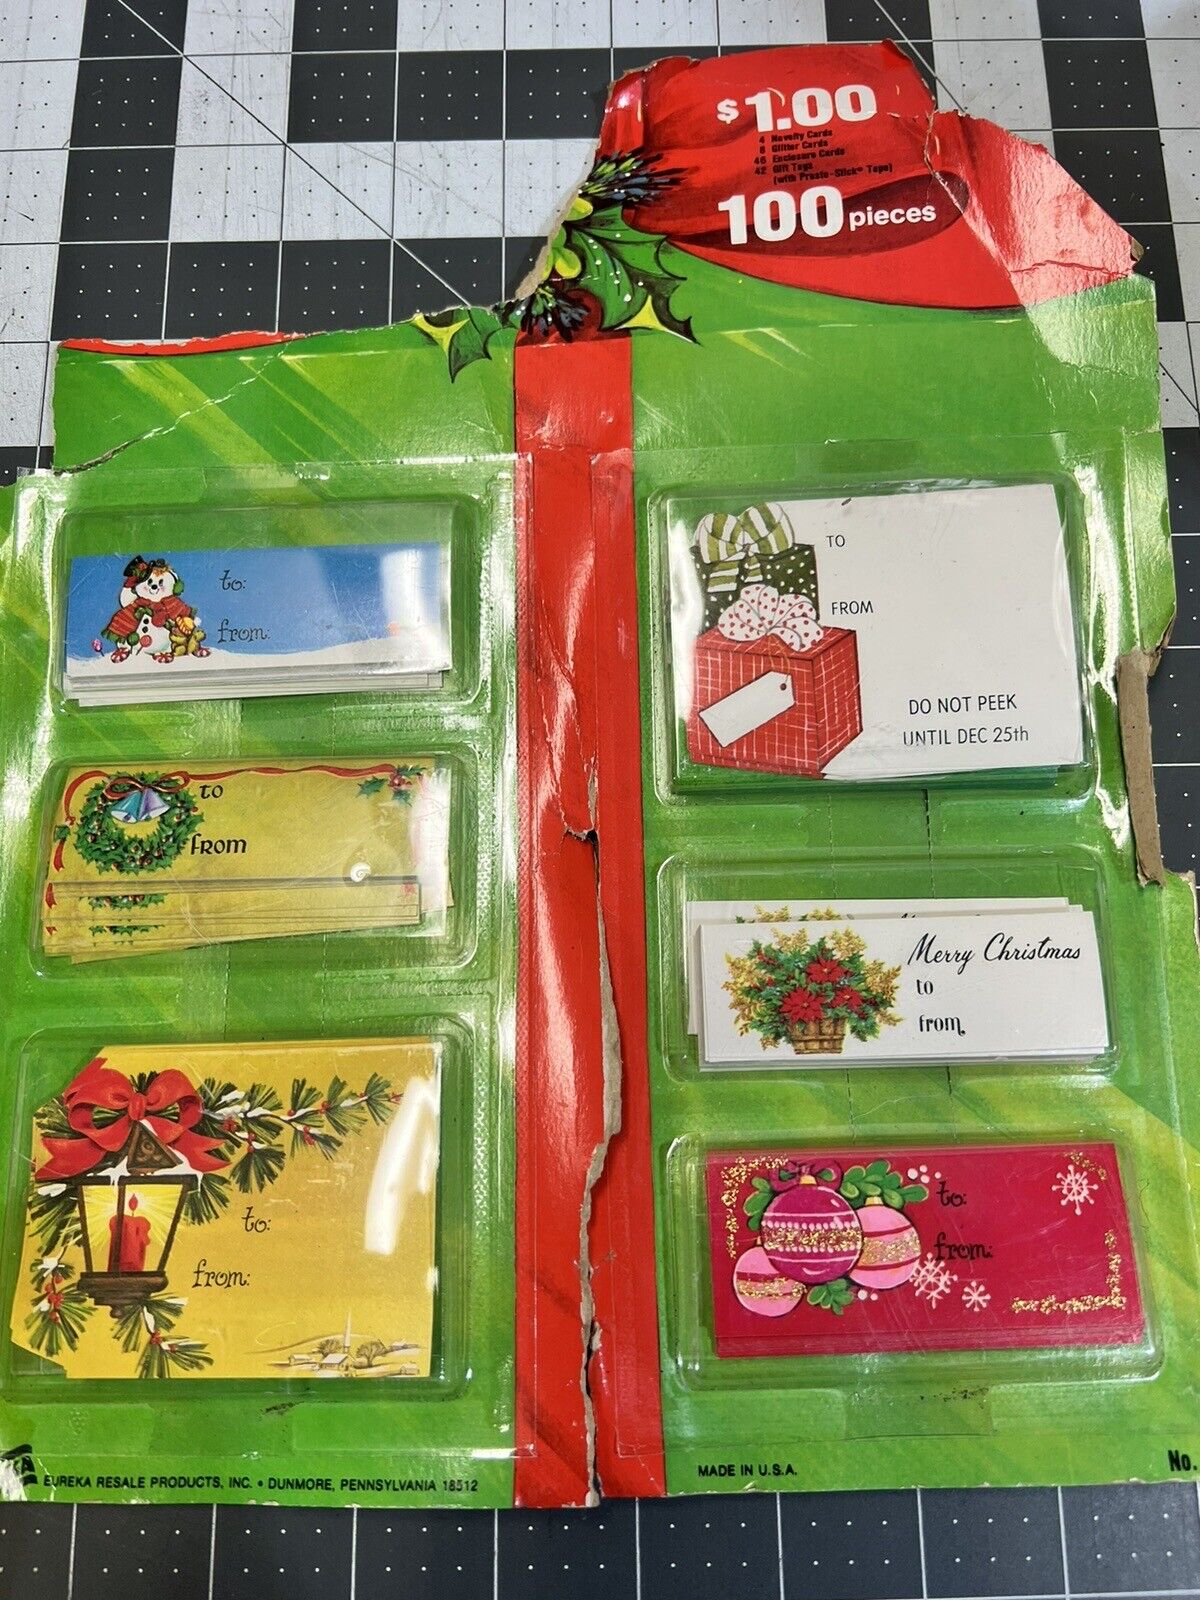 NOS vintage Christmas gift tags